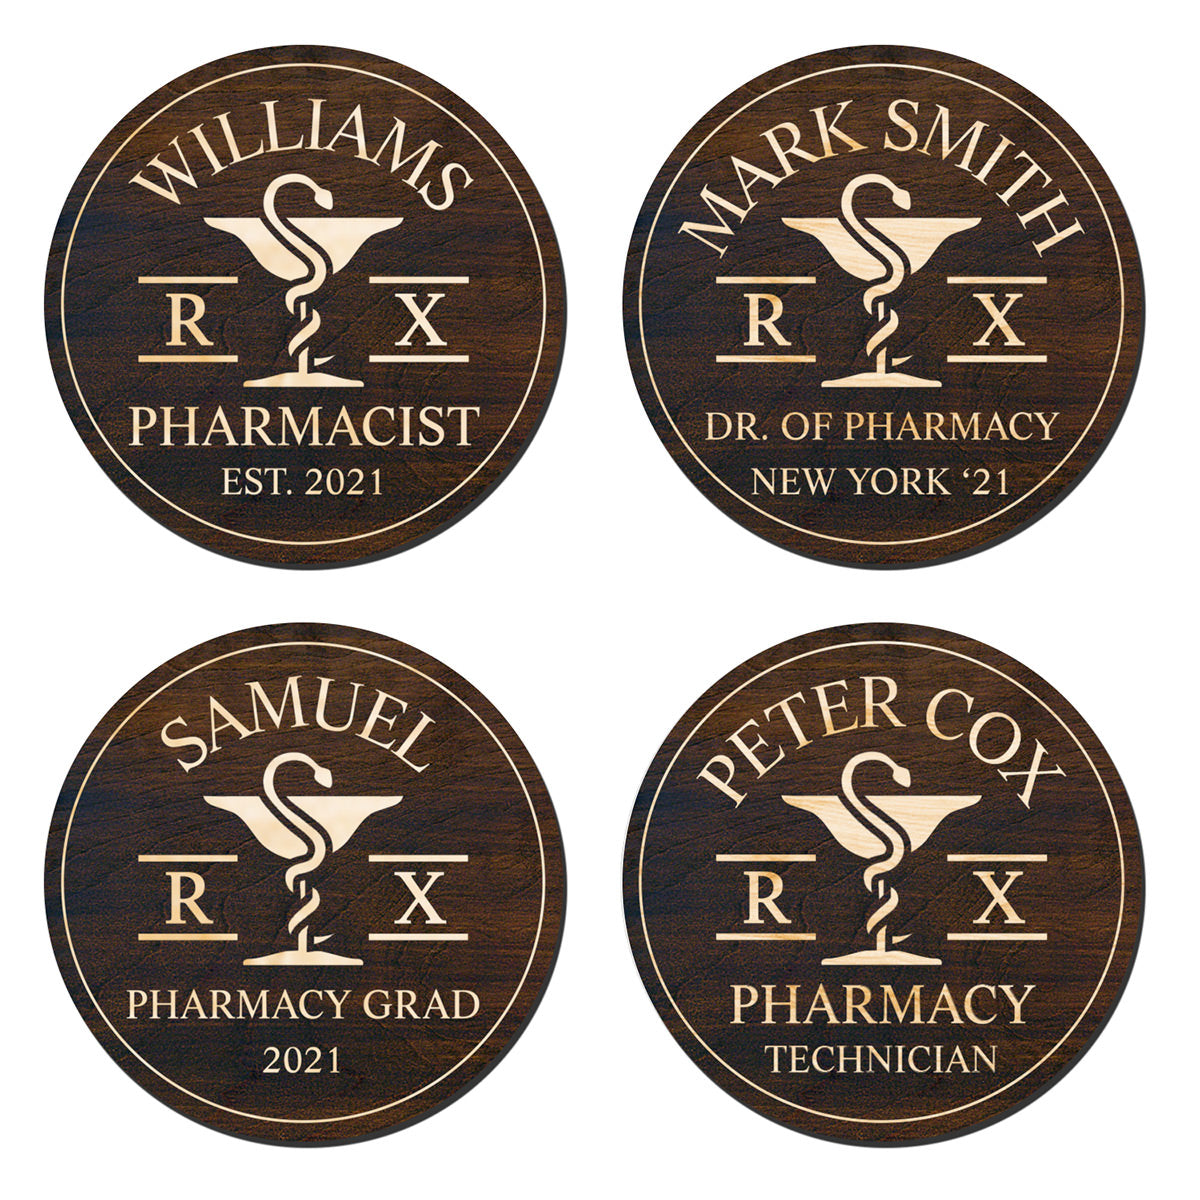 Personalized Pharmacy Sign - Pharmacist Graduation Gift